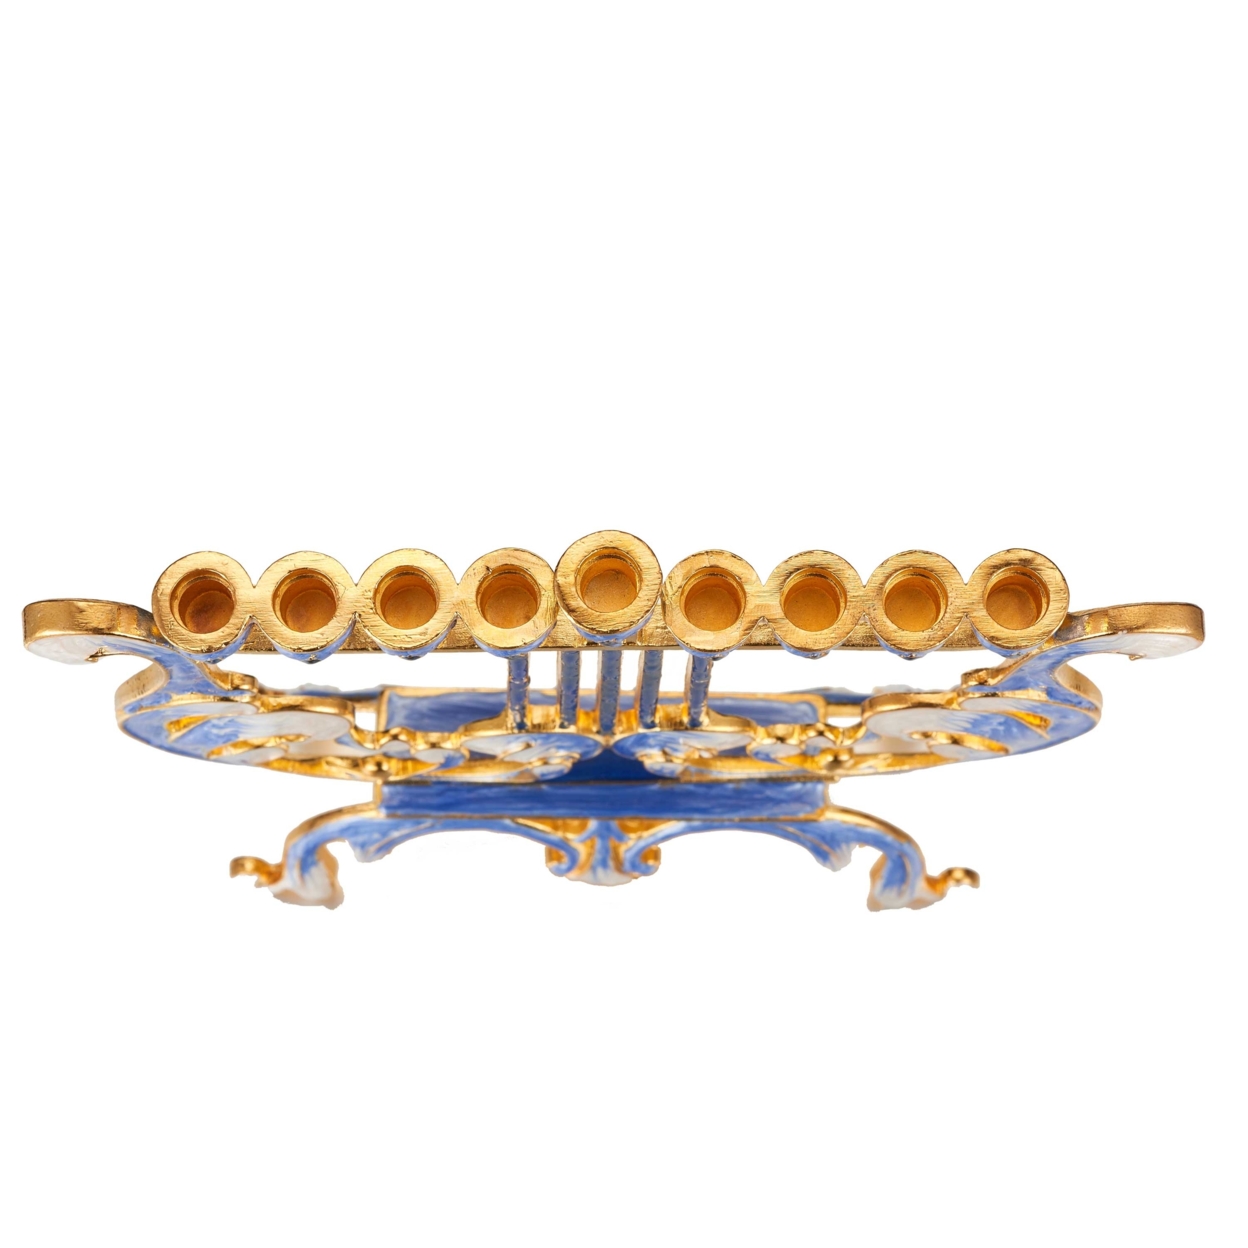 Matashi Hand Painted Blue And Ivory Harp Menorah Candelabra, W/ Gold Accents & Crystals Jewish Hanukkah Decor Holiday Gift